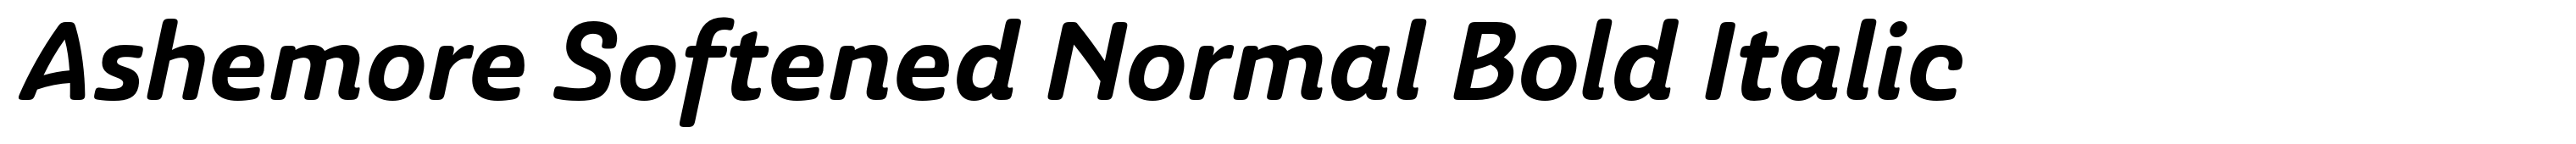 Ashemore Softened Normal Bold Italic